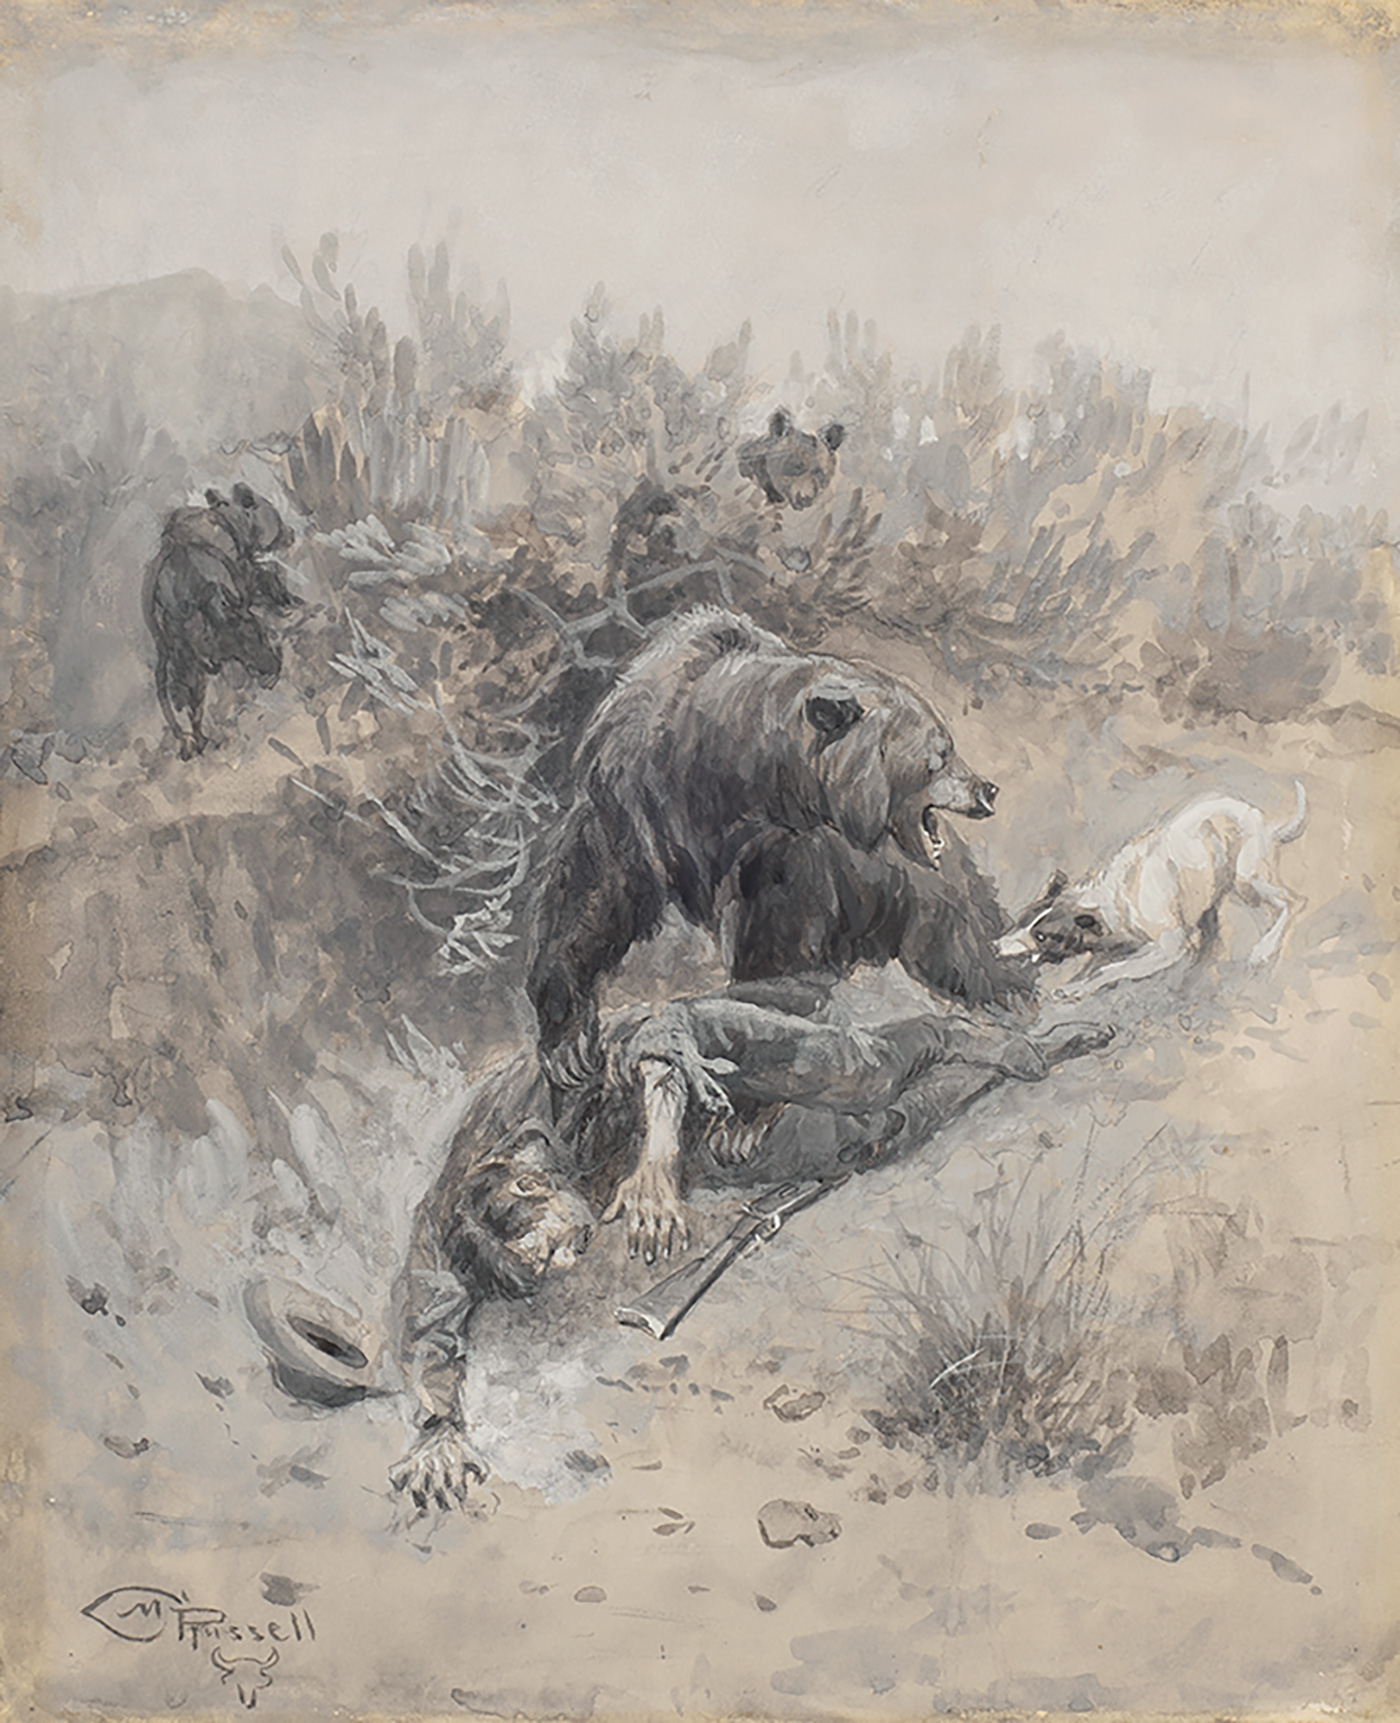 A bear mauls a man while a dog bites its hind leg.